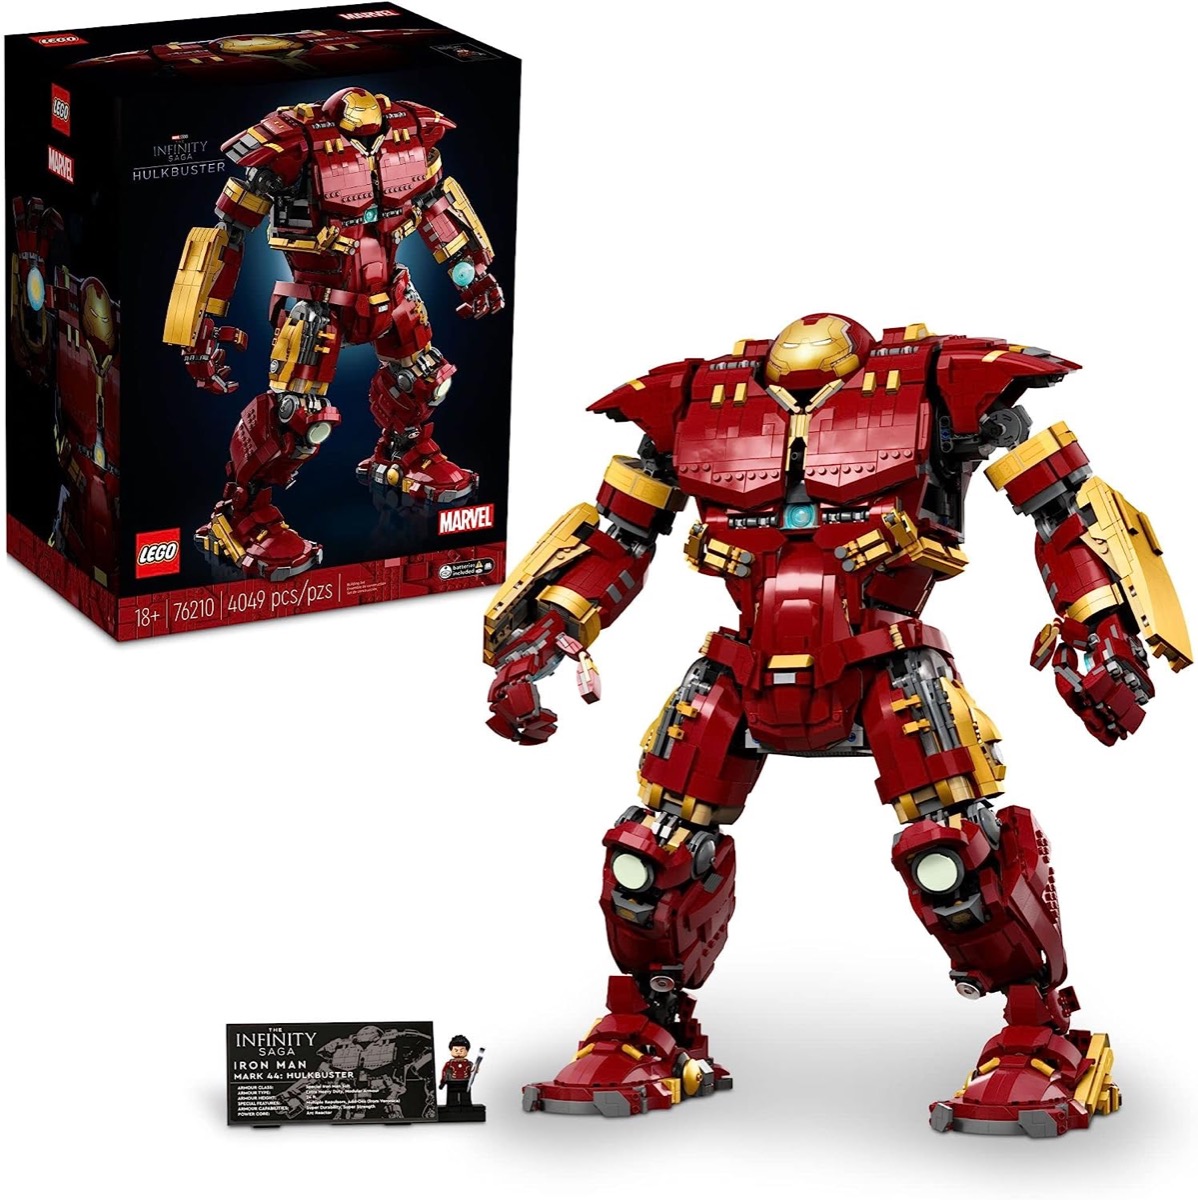 A LEGO version of Iron Man's Hulkbuster mech suit 